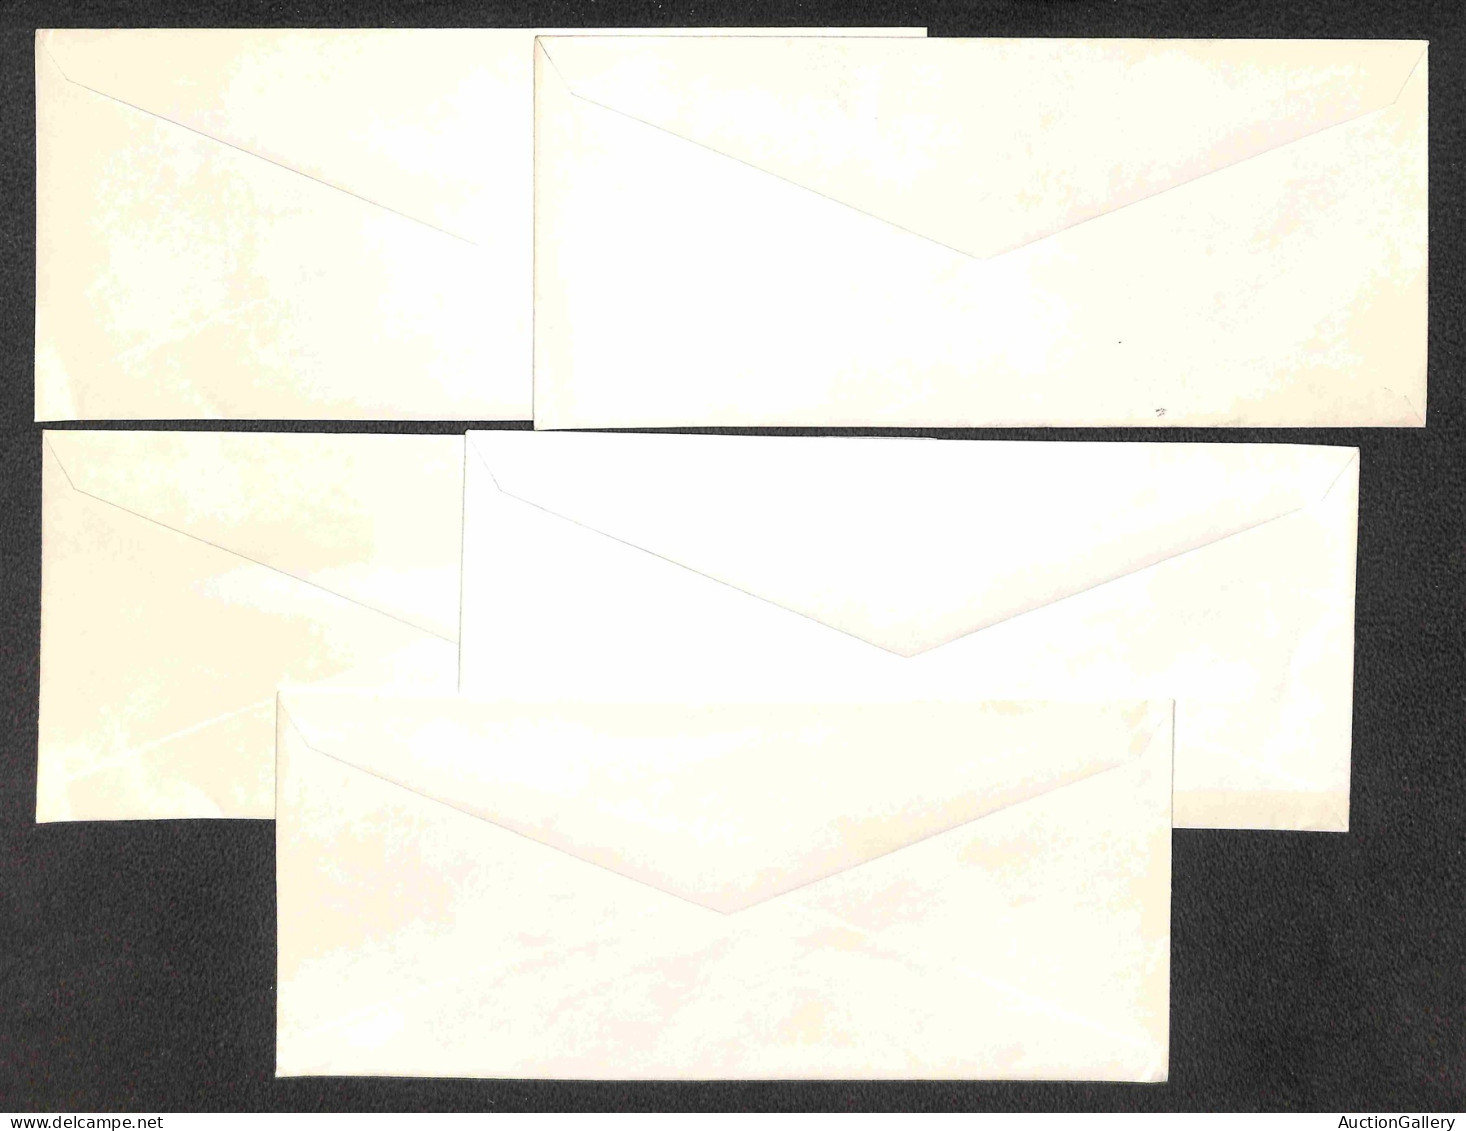 LOTTI & COLLEZIONI - STATI UNITI D'AMERICA - 1894/1964 - Piccolo insieme di 27 interi di cui 6 cartoline + 21 buste - nu